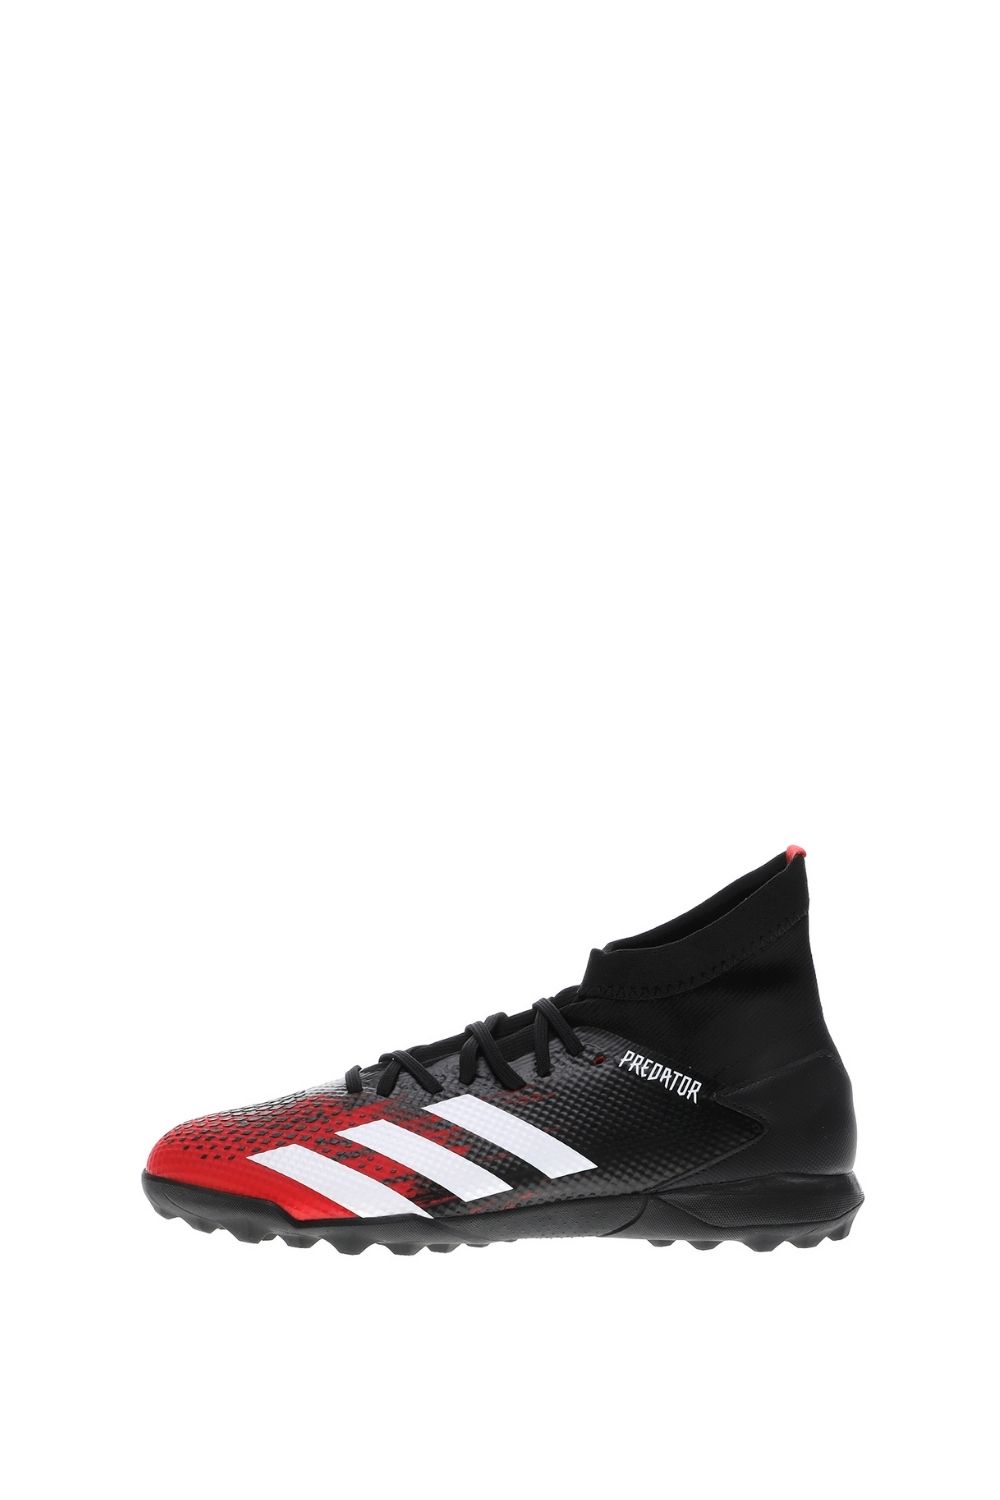 adidas Performance - Ανδρικά ποδοσφαιρικά παπούτσια adidas Performance EF2208 PREDATOR 20.3 TF μαύρα Ανδρικά/Παπούτσια/Αθλητικά/Football